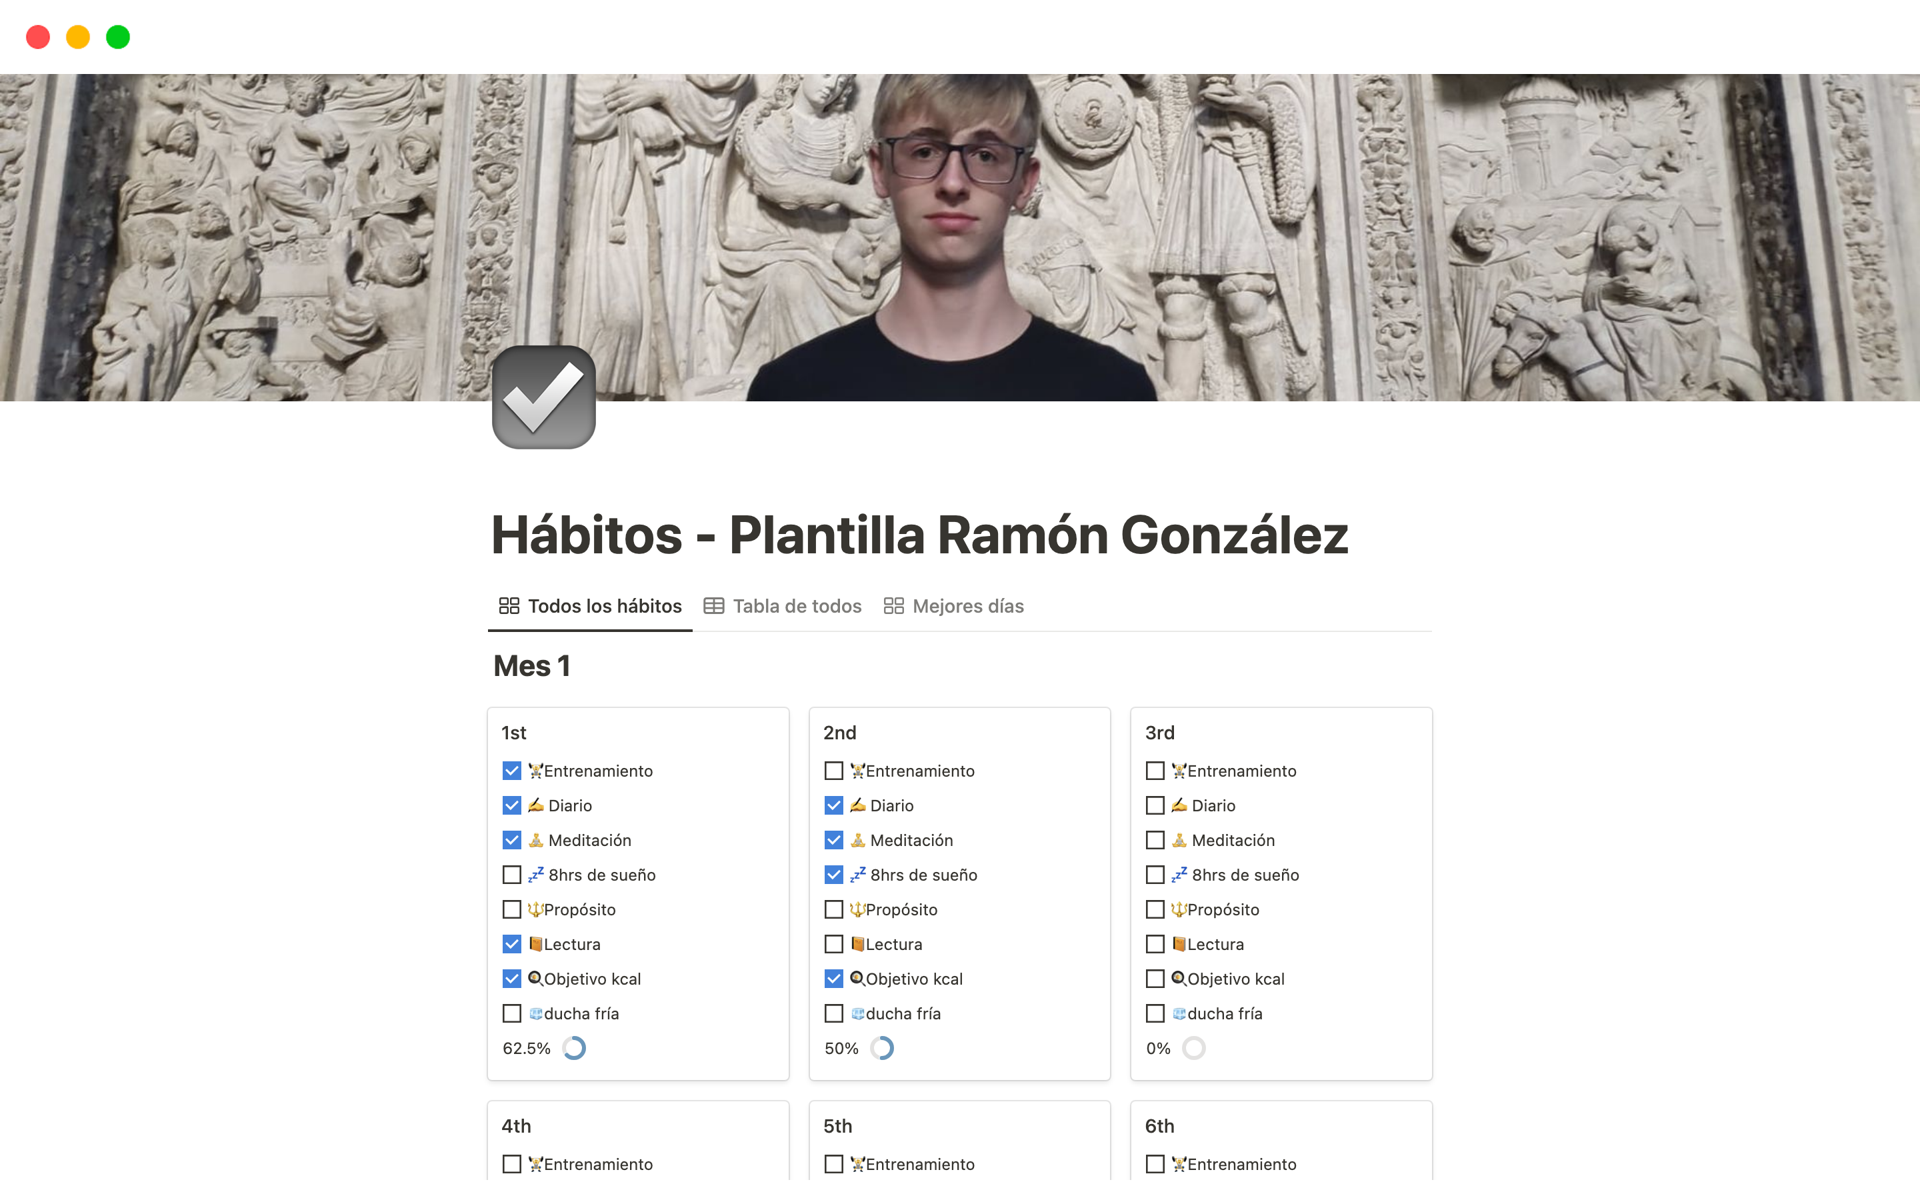 Uma prévia do modelo para Hábitos - Plantilla Ramón González